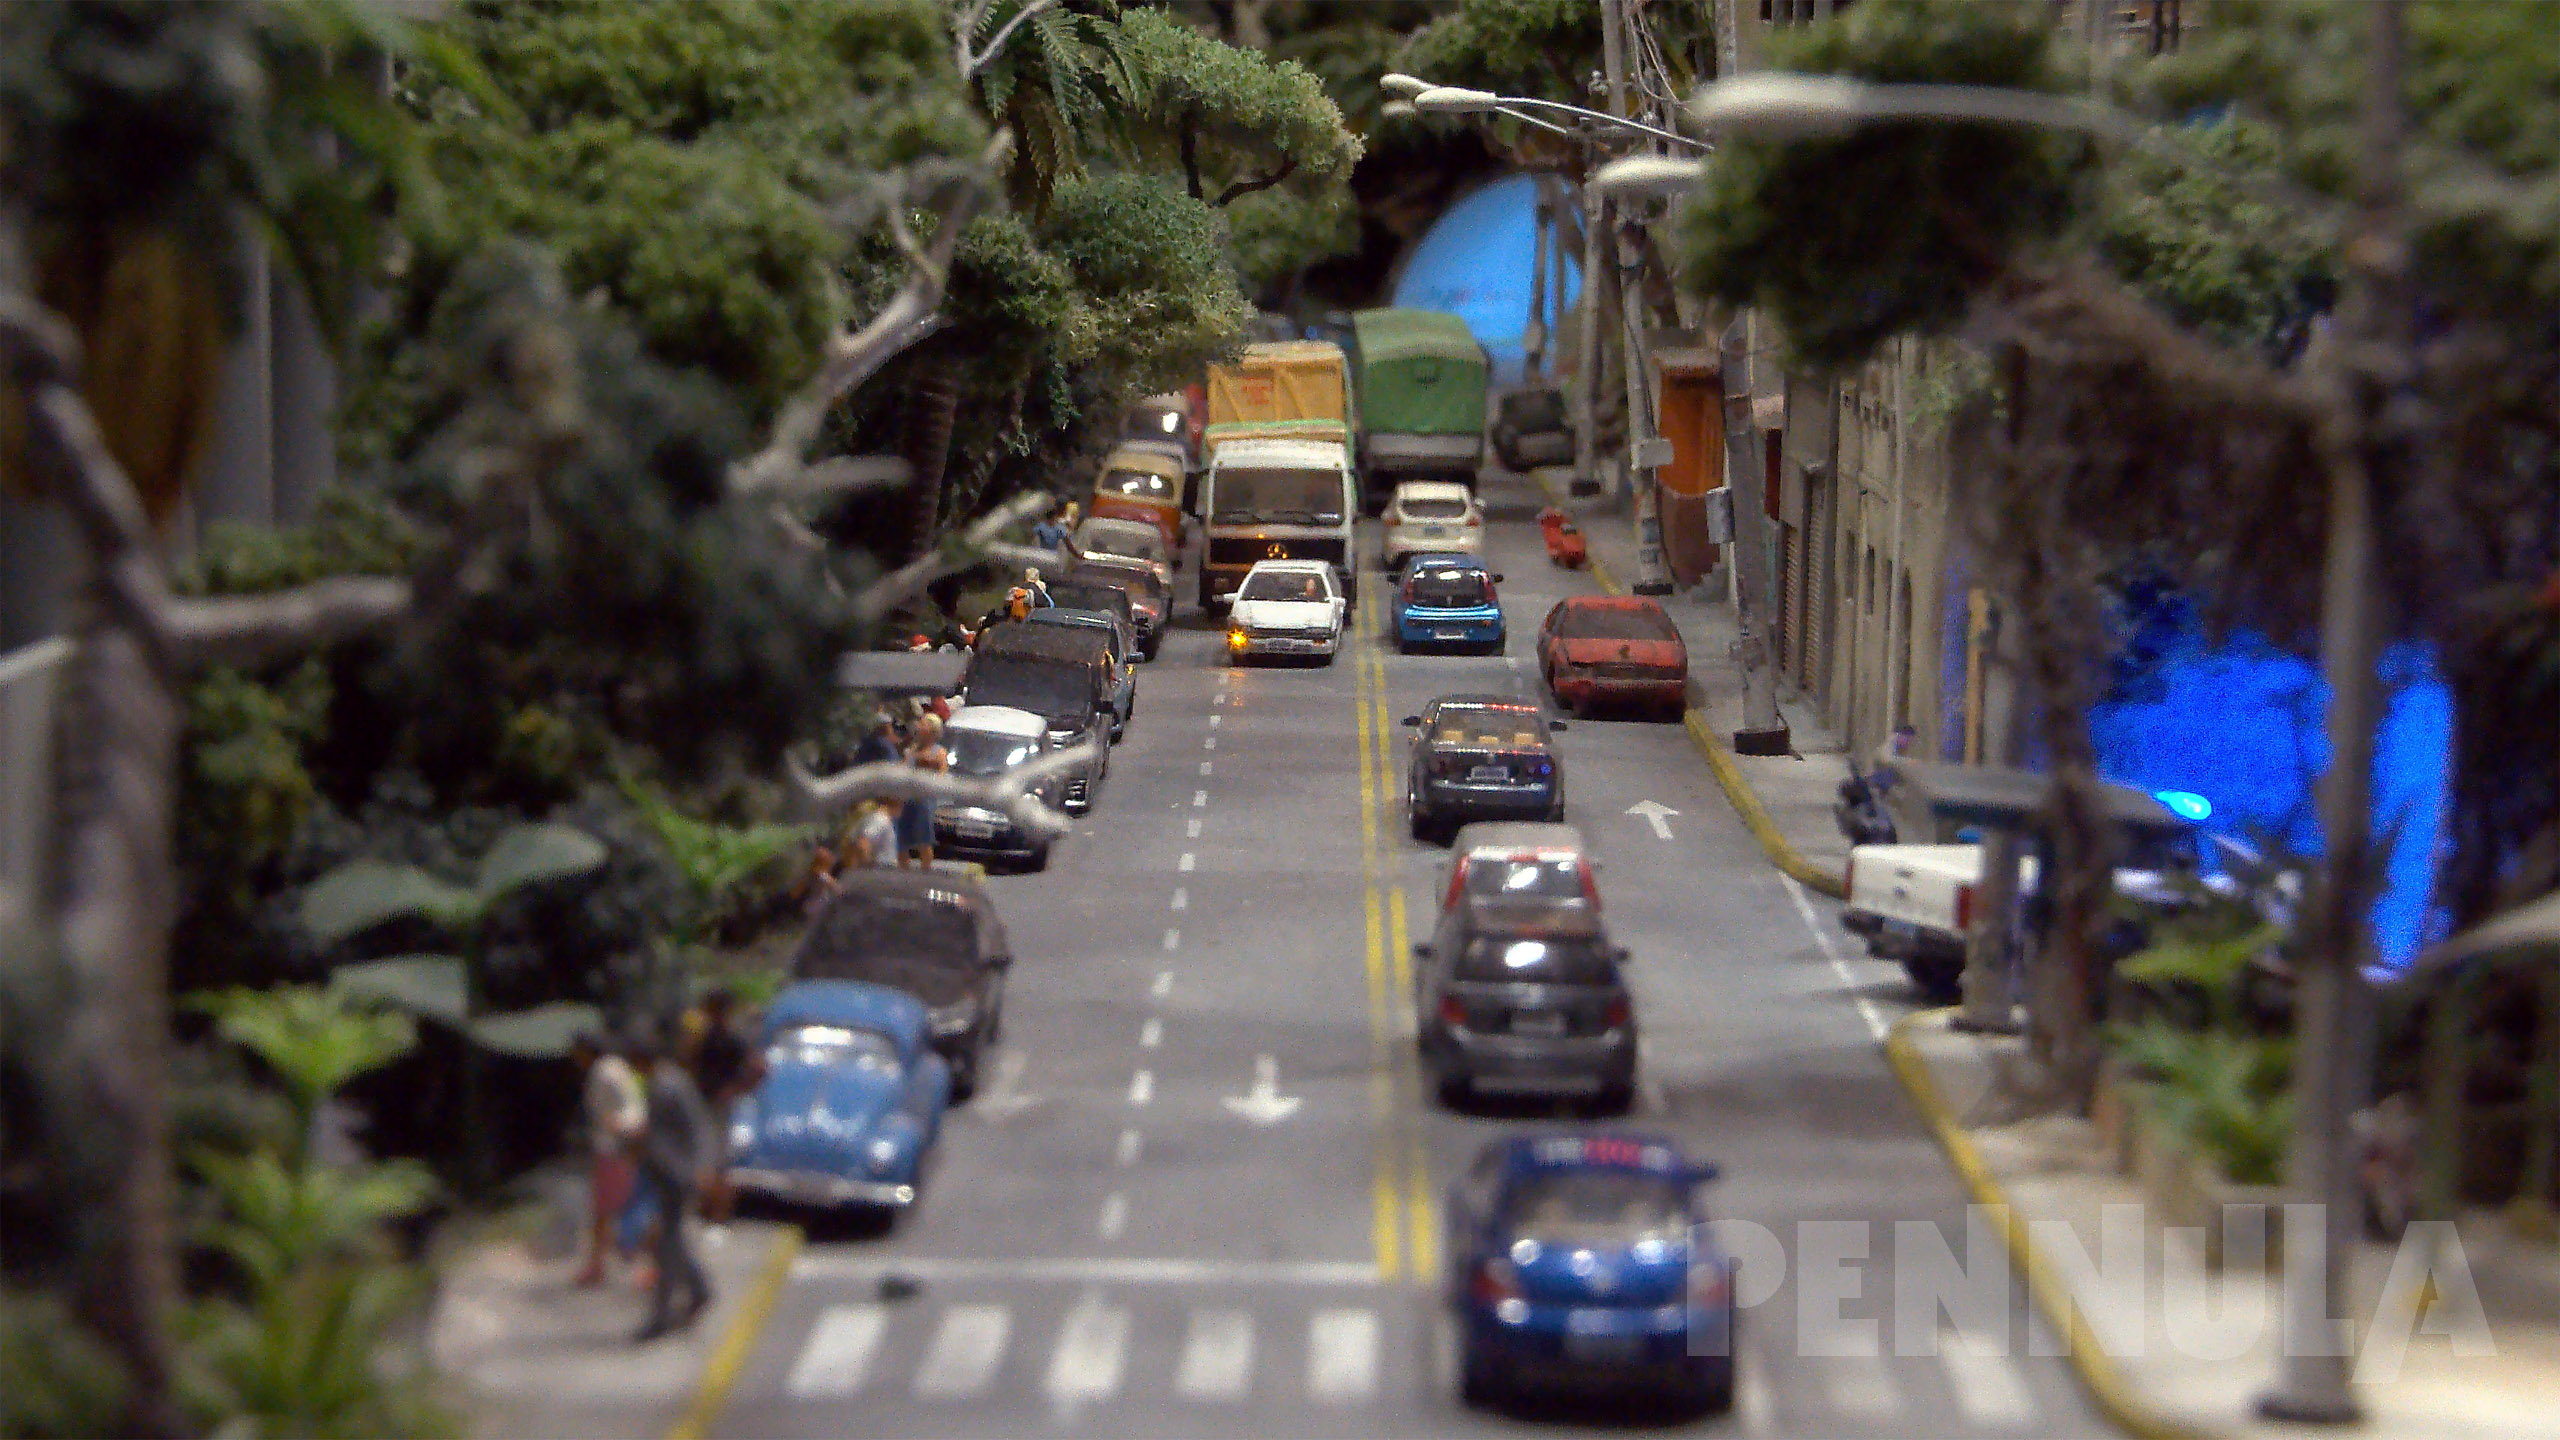 Miniatur Wunderland Modellbahn - Die Modellstraßenbahn H0 von Santa Teresa in Rio de Janeiro